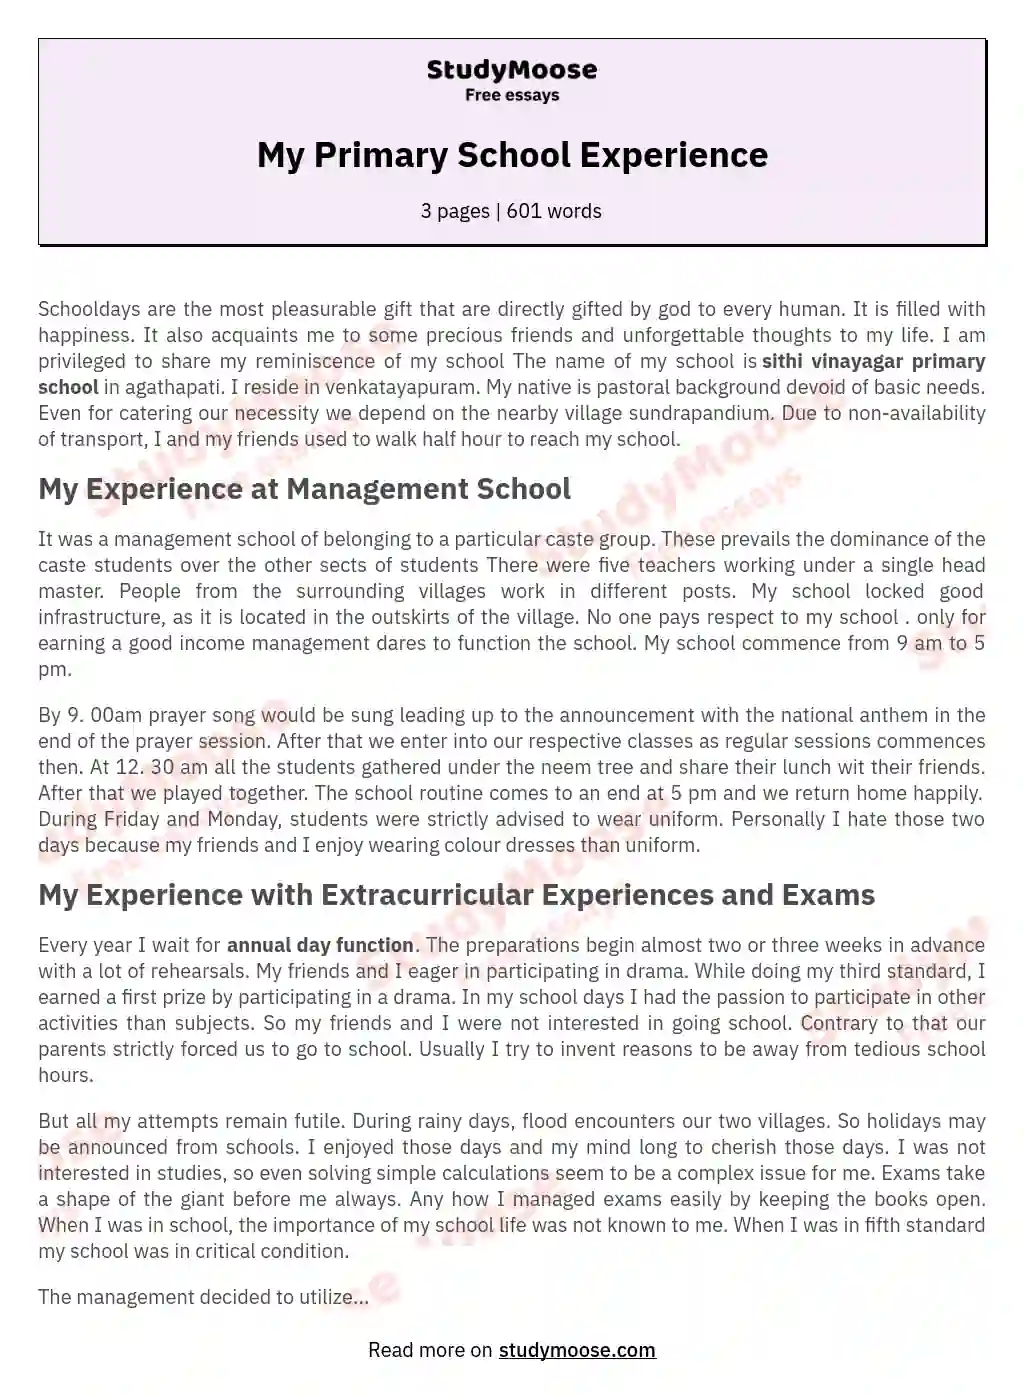 My Primary School Experience essay